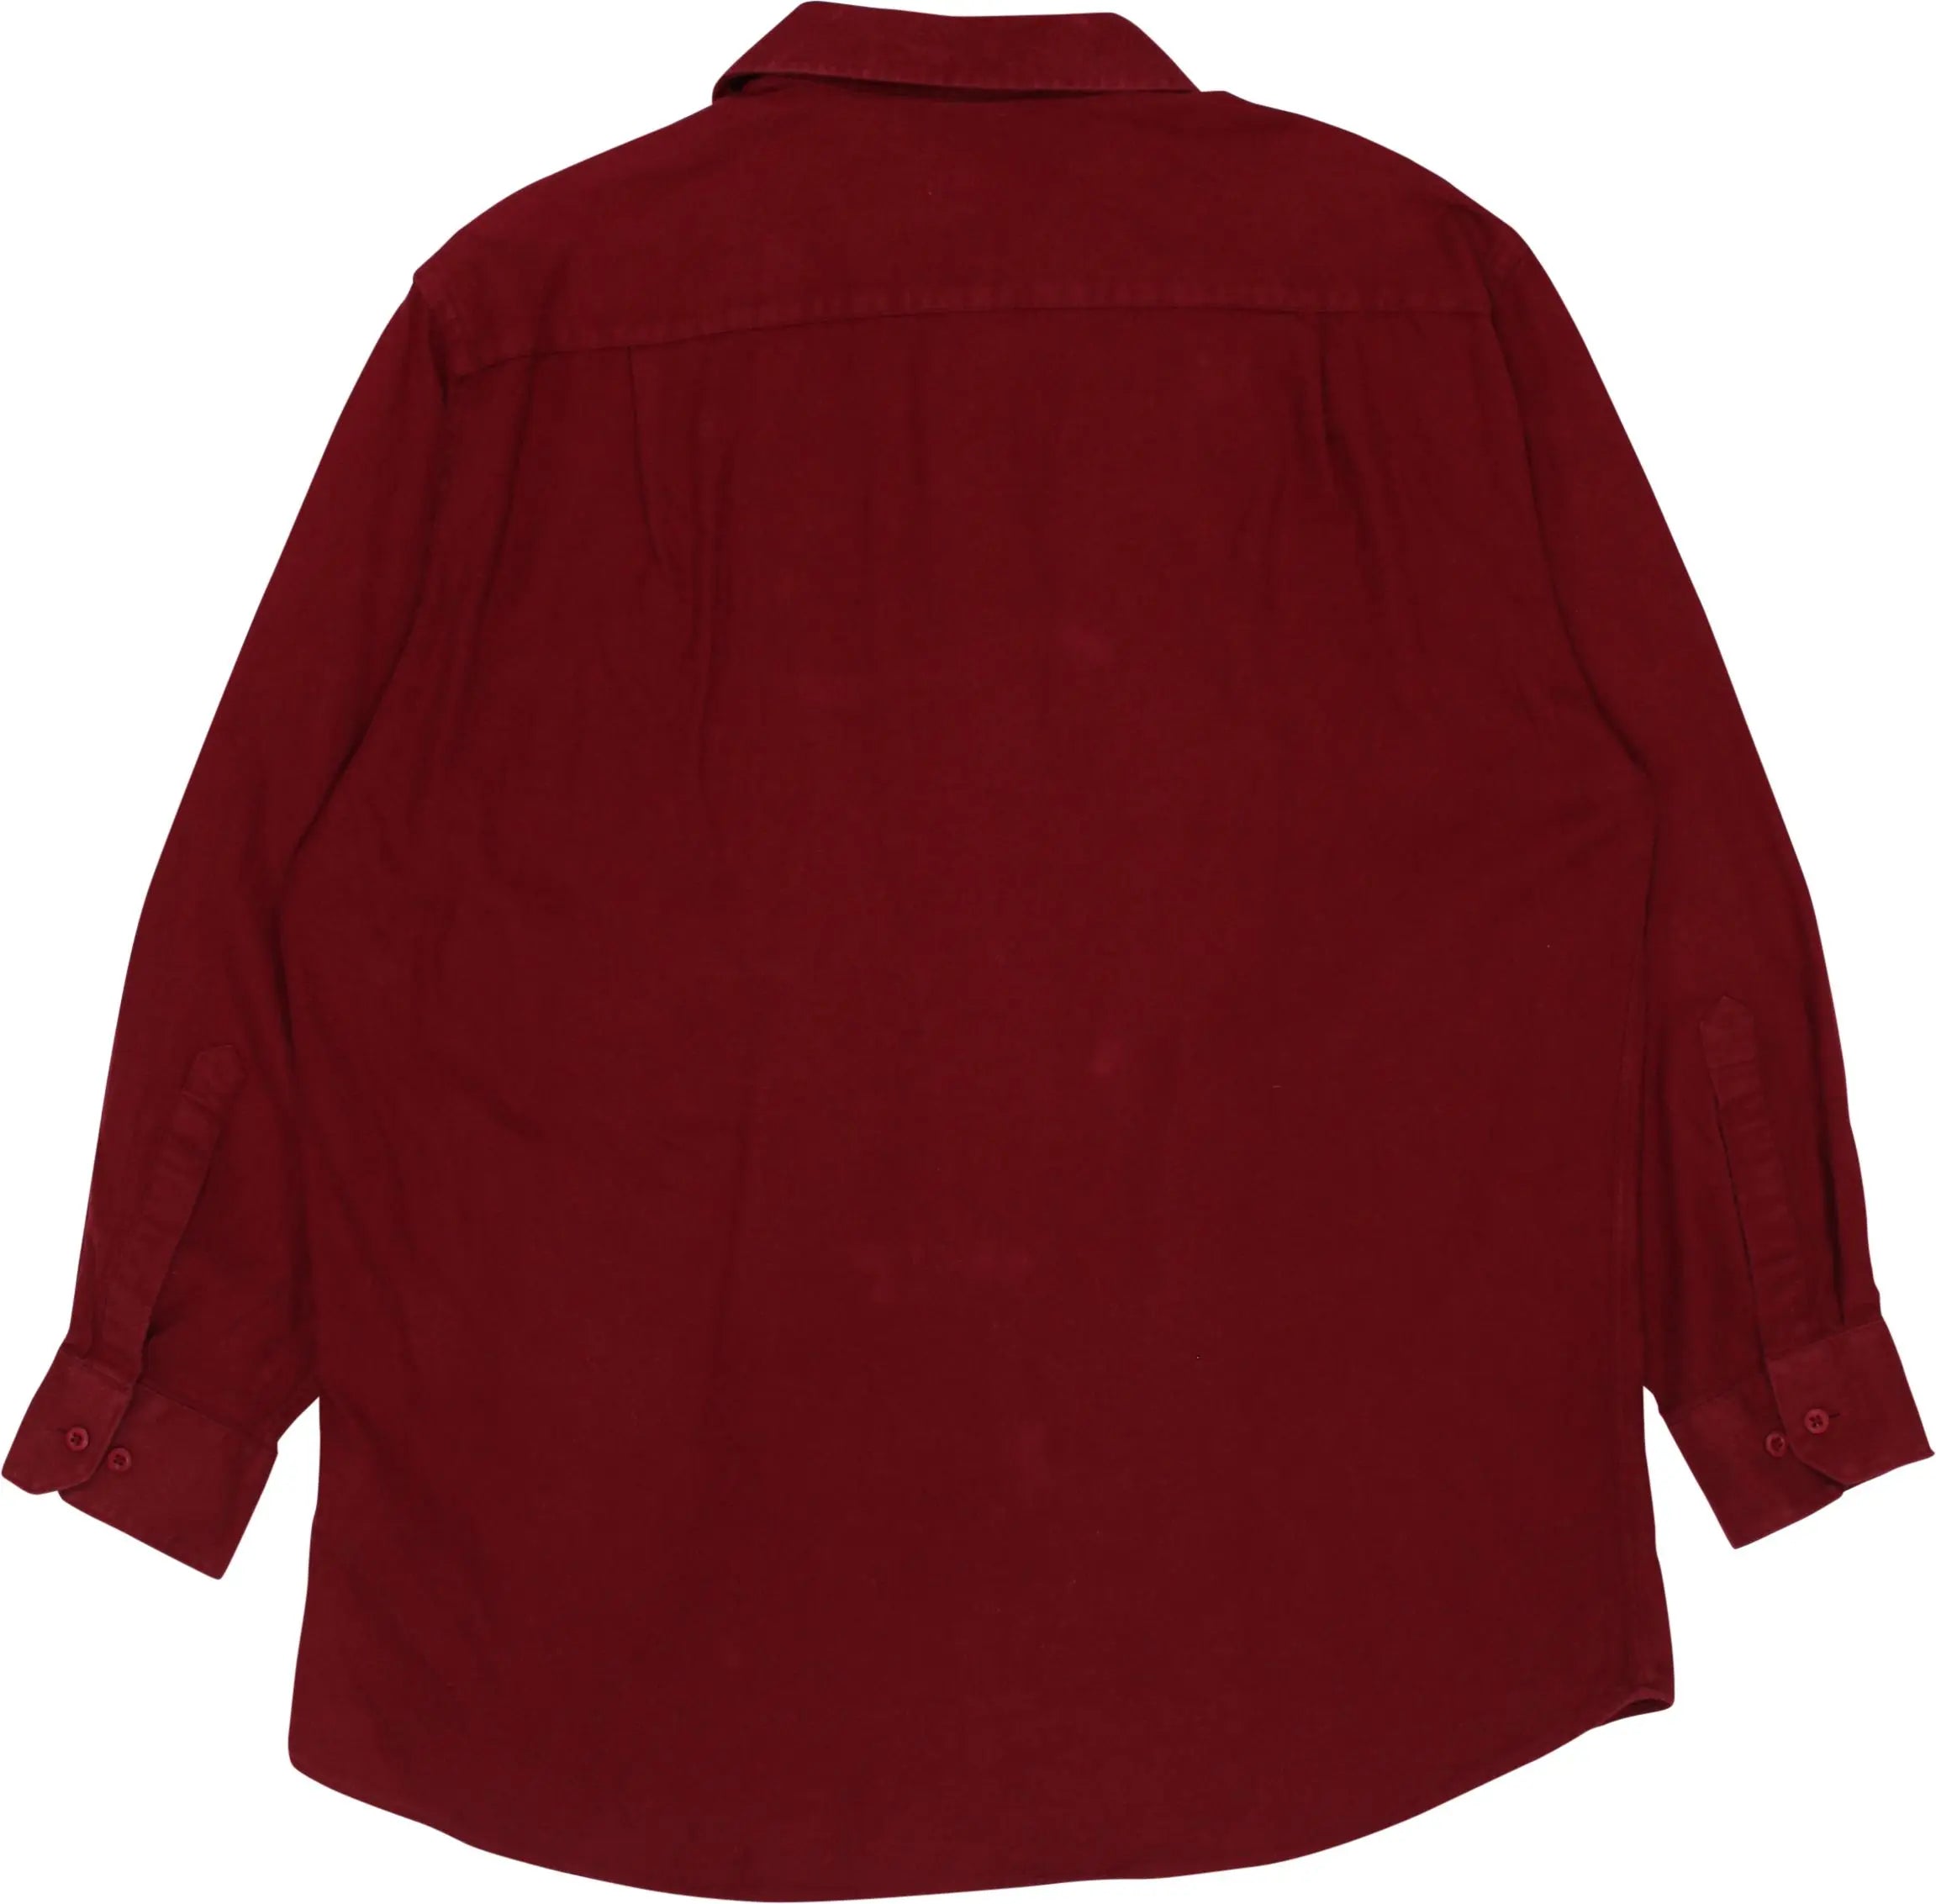 Walbusch Trelegant - Flannel Shirt- ThriftTale.com - Vintage and second handclothing